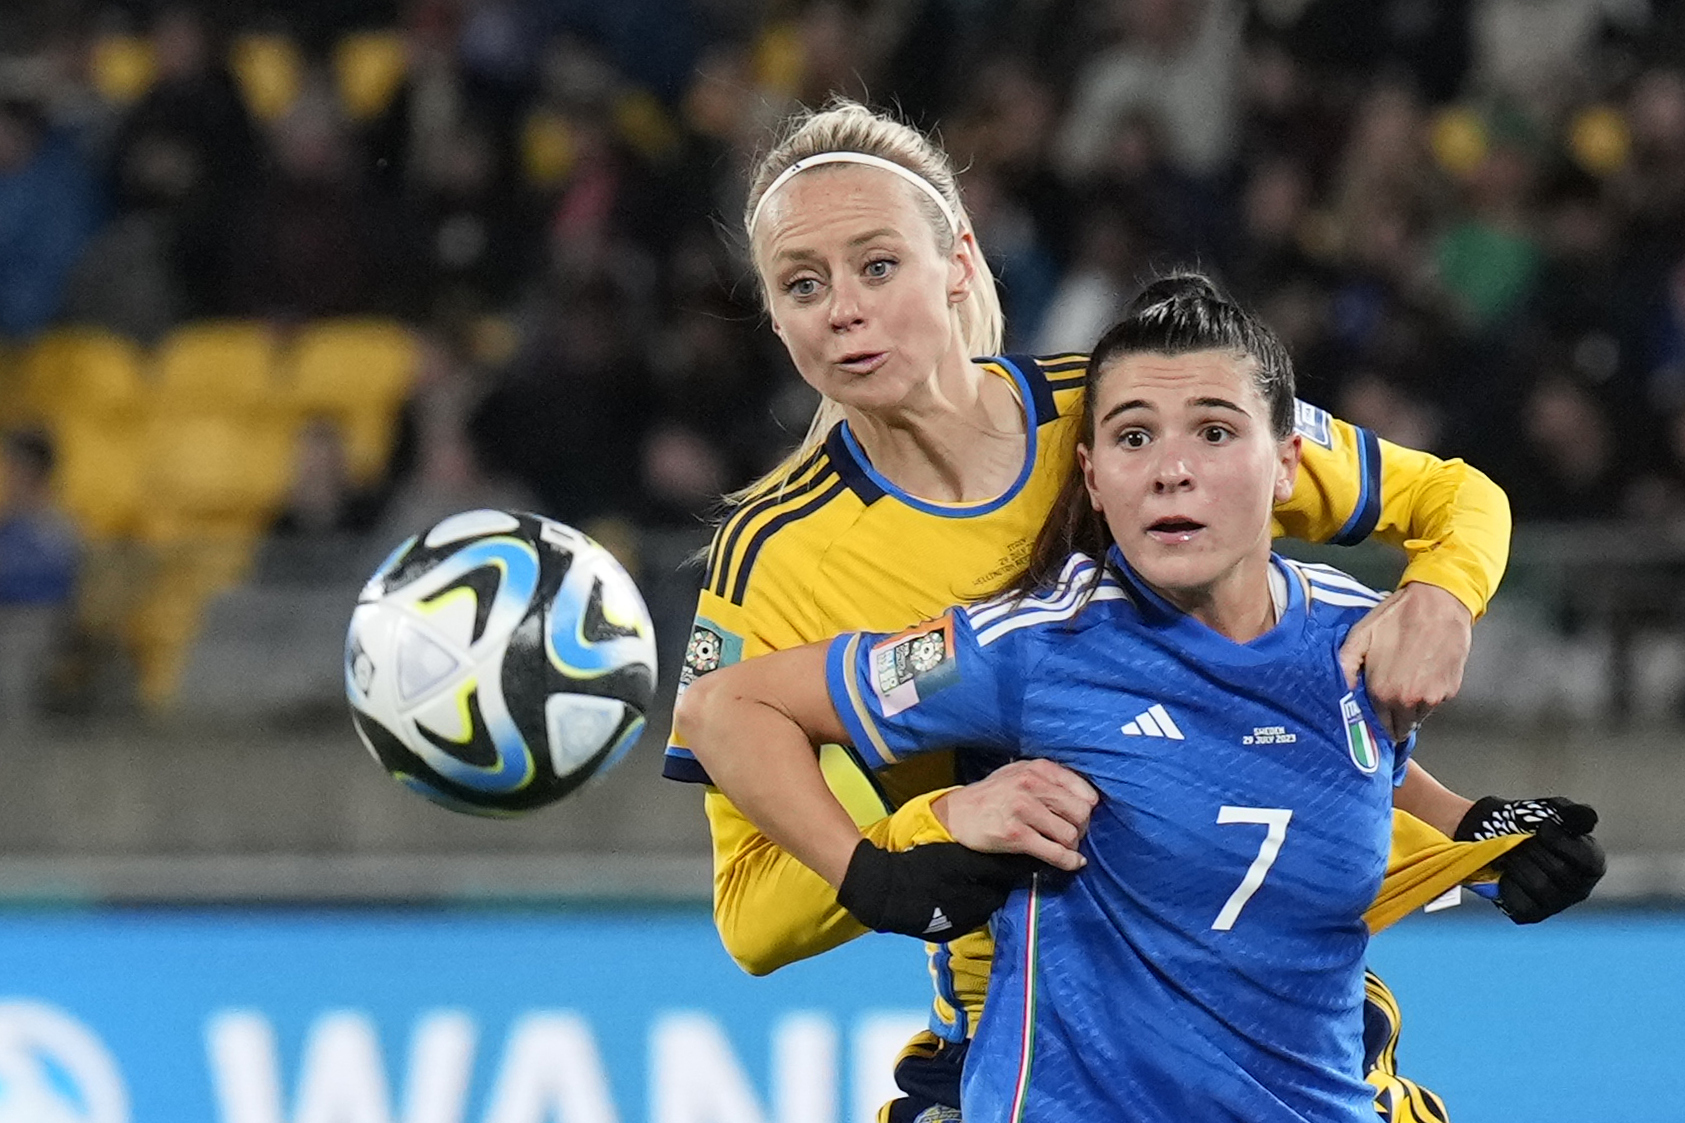 Palermo strengthen with Swedish international Quaison - Eurosport